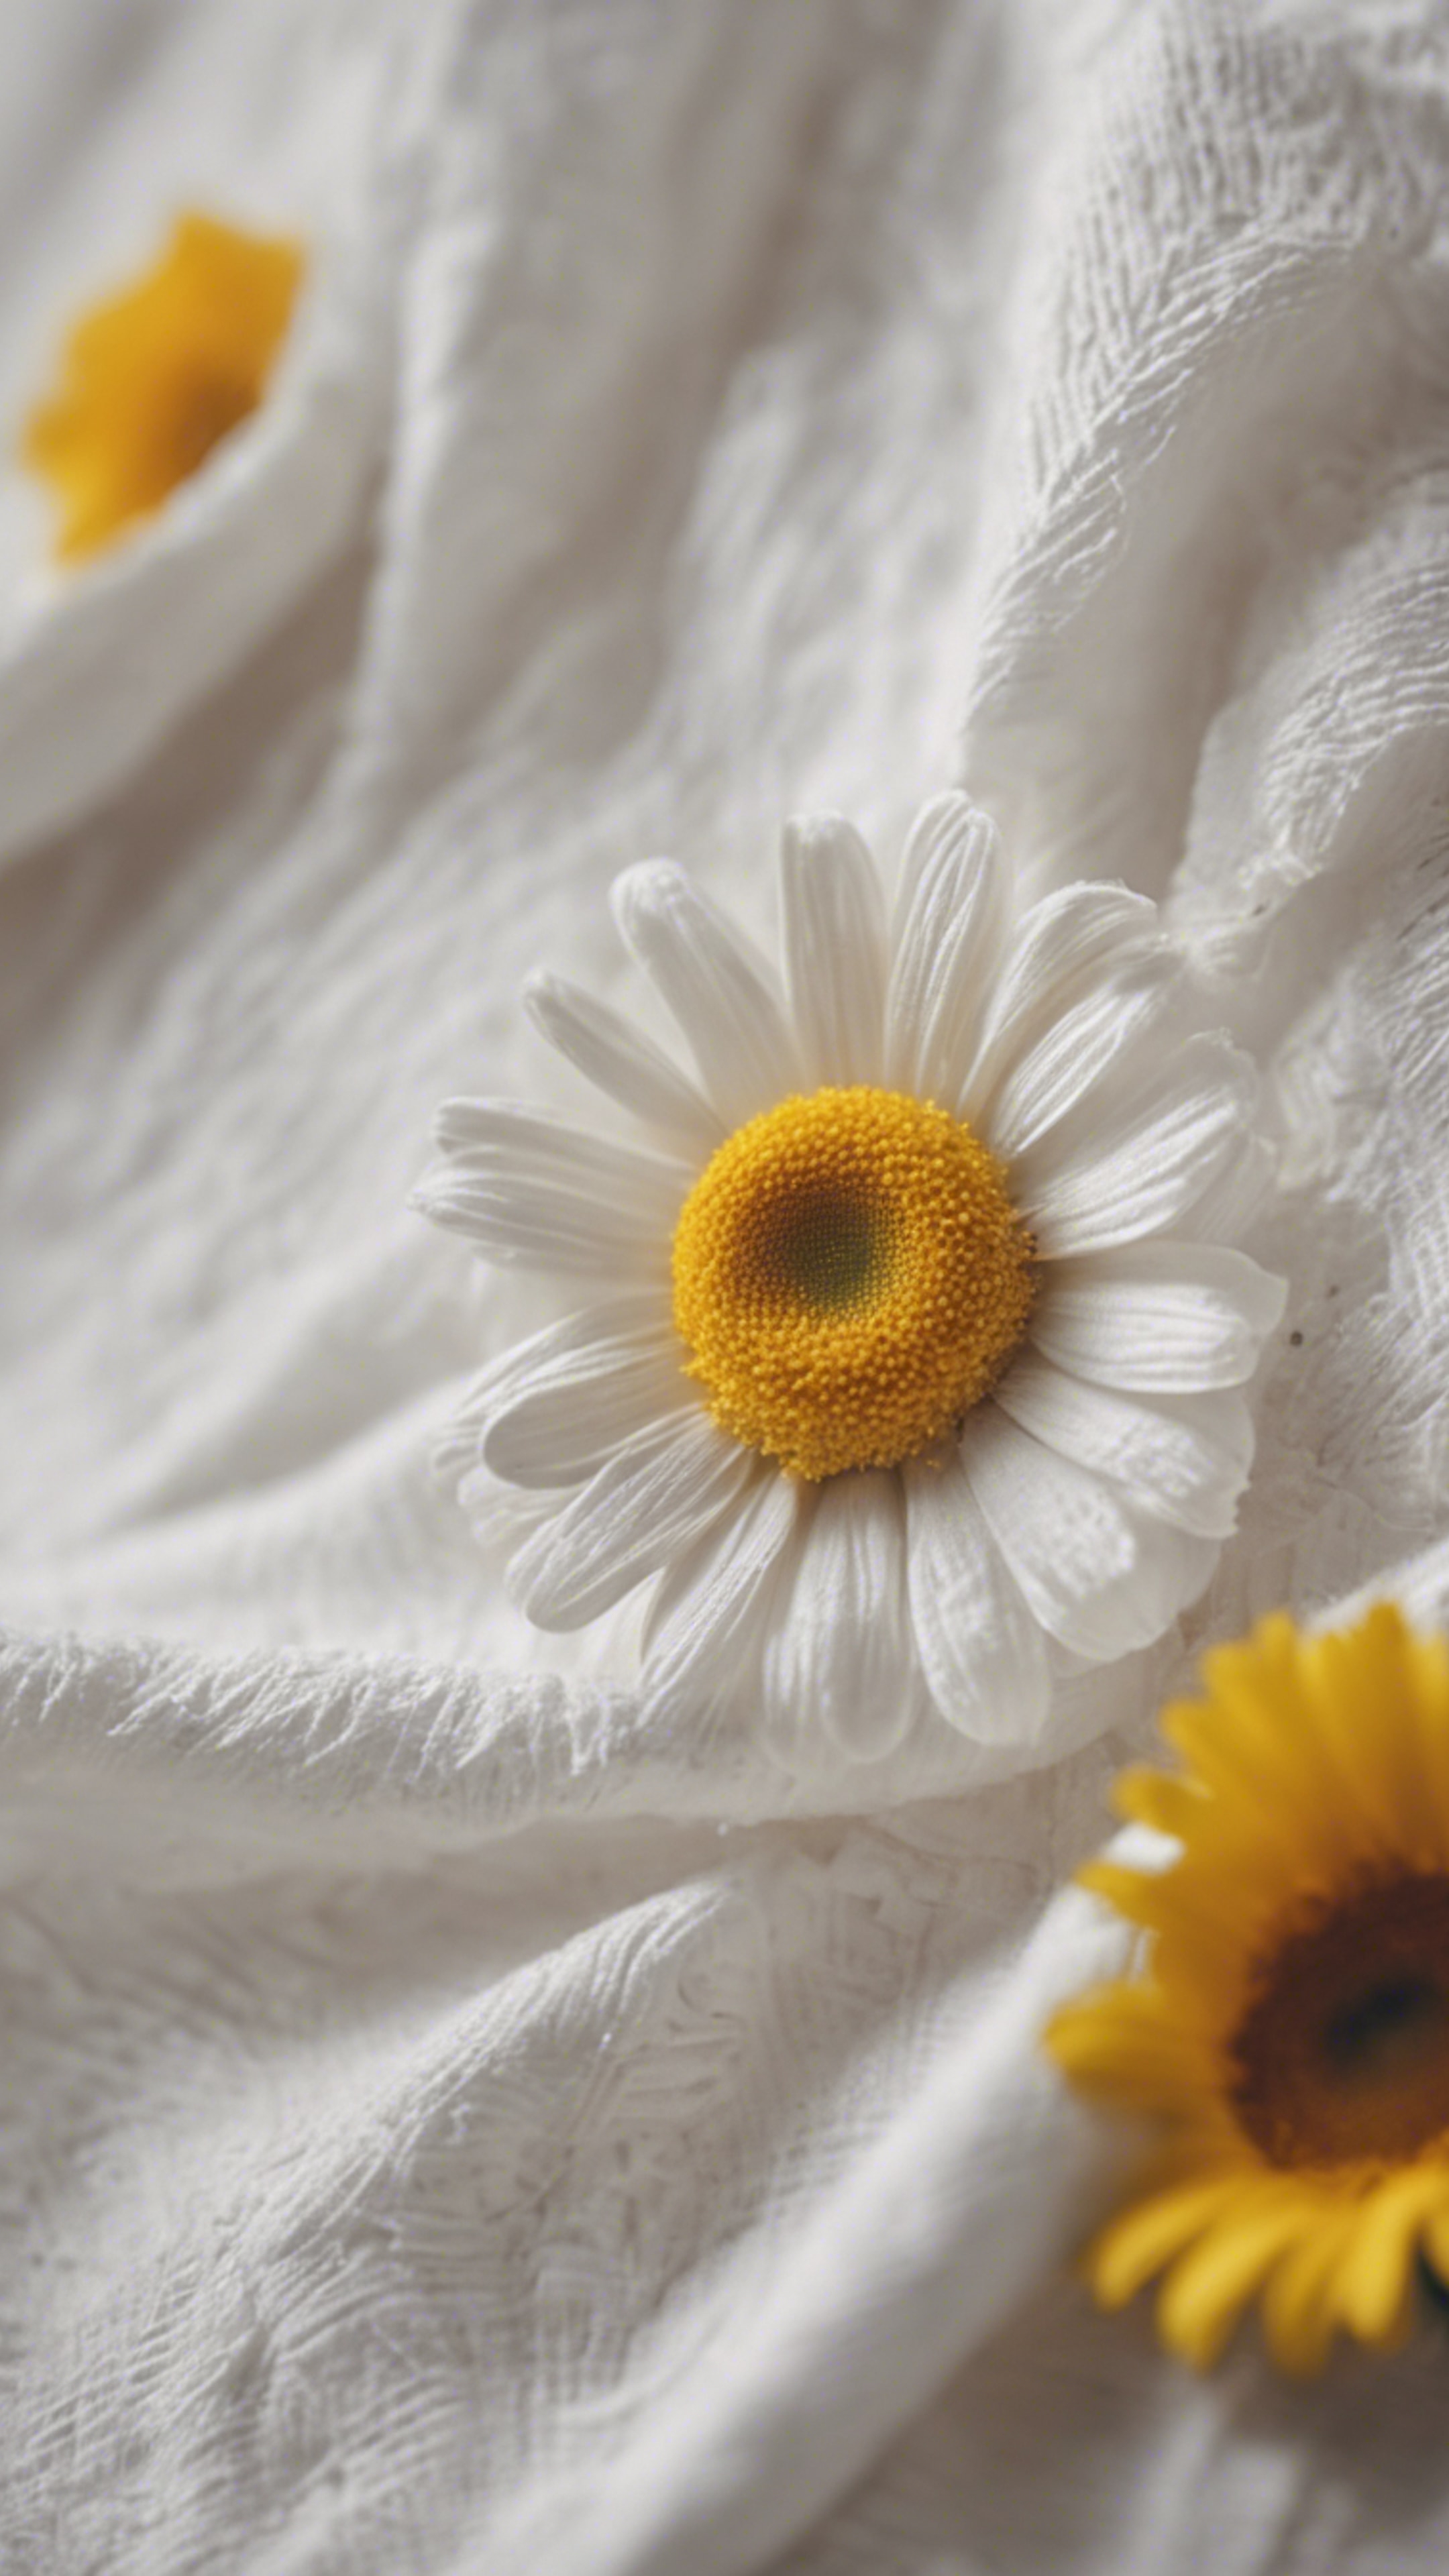 A white cotton dress with a daisy, featuring yellow petals and a white center. Шпалери[81c17e18773146008e6c]